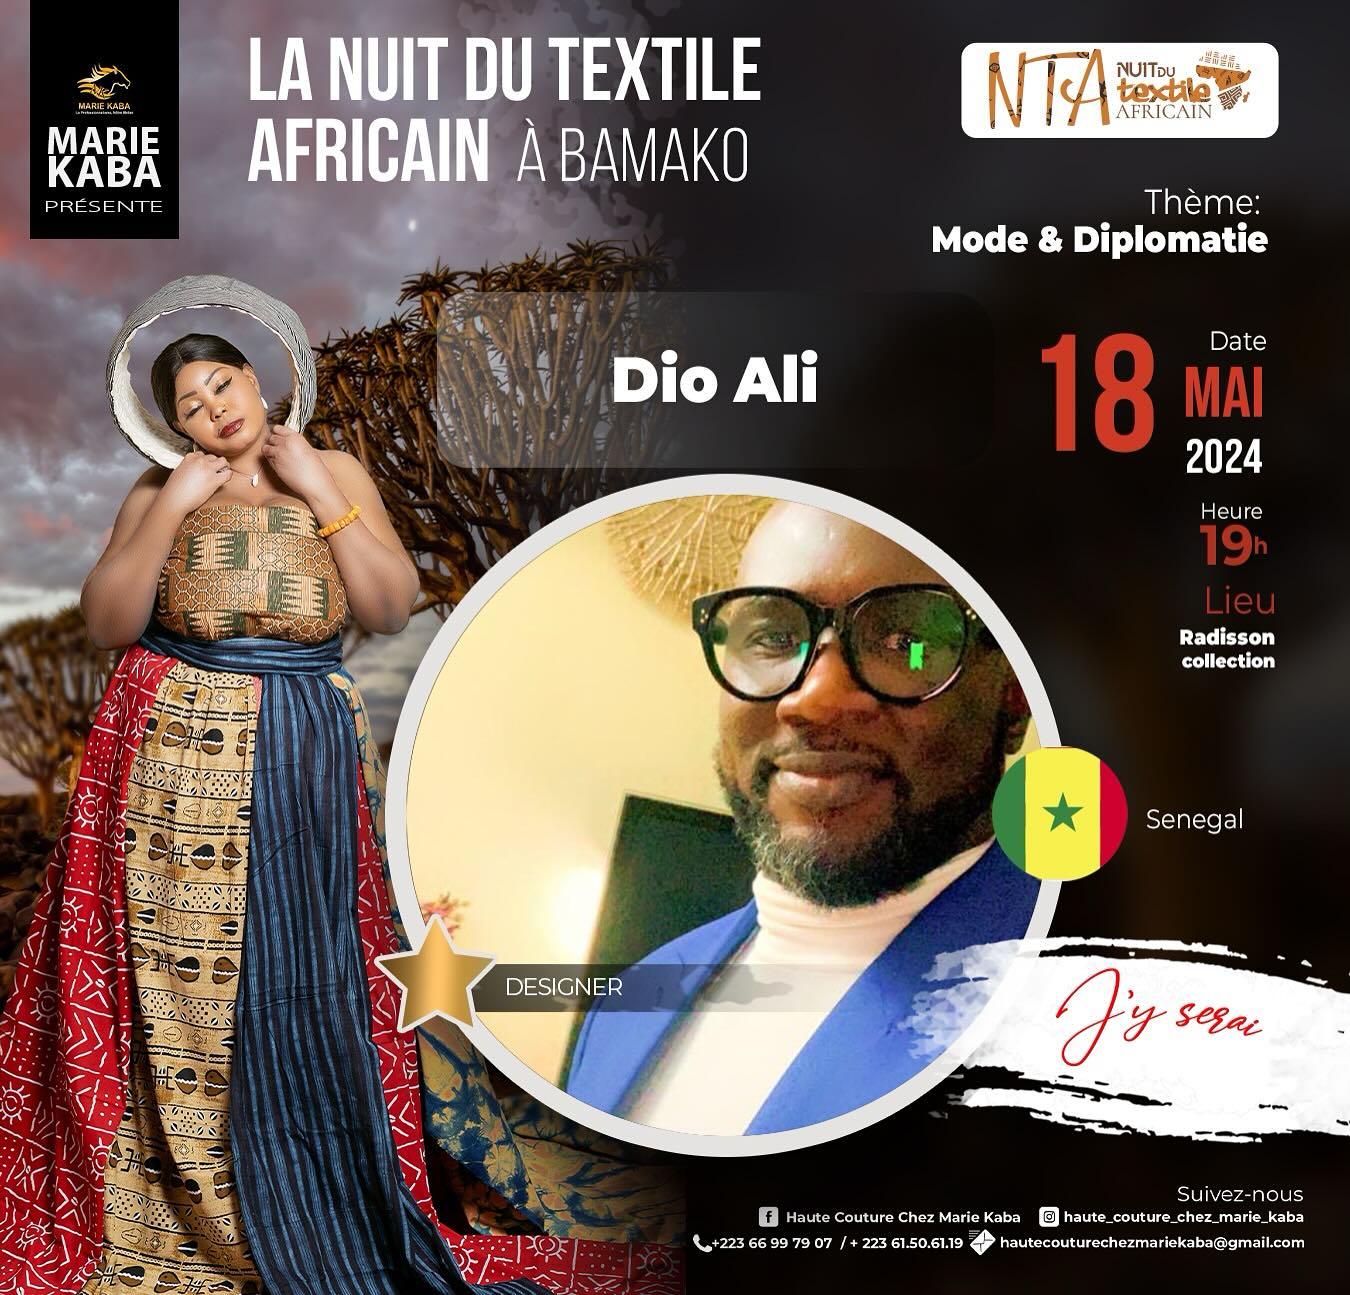 LA NUIT DU TEXTILE AFRICAIN A BAMAKO presents Diongue Aliou from  Cameroun